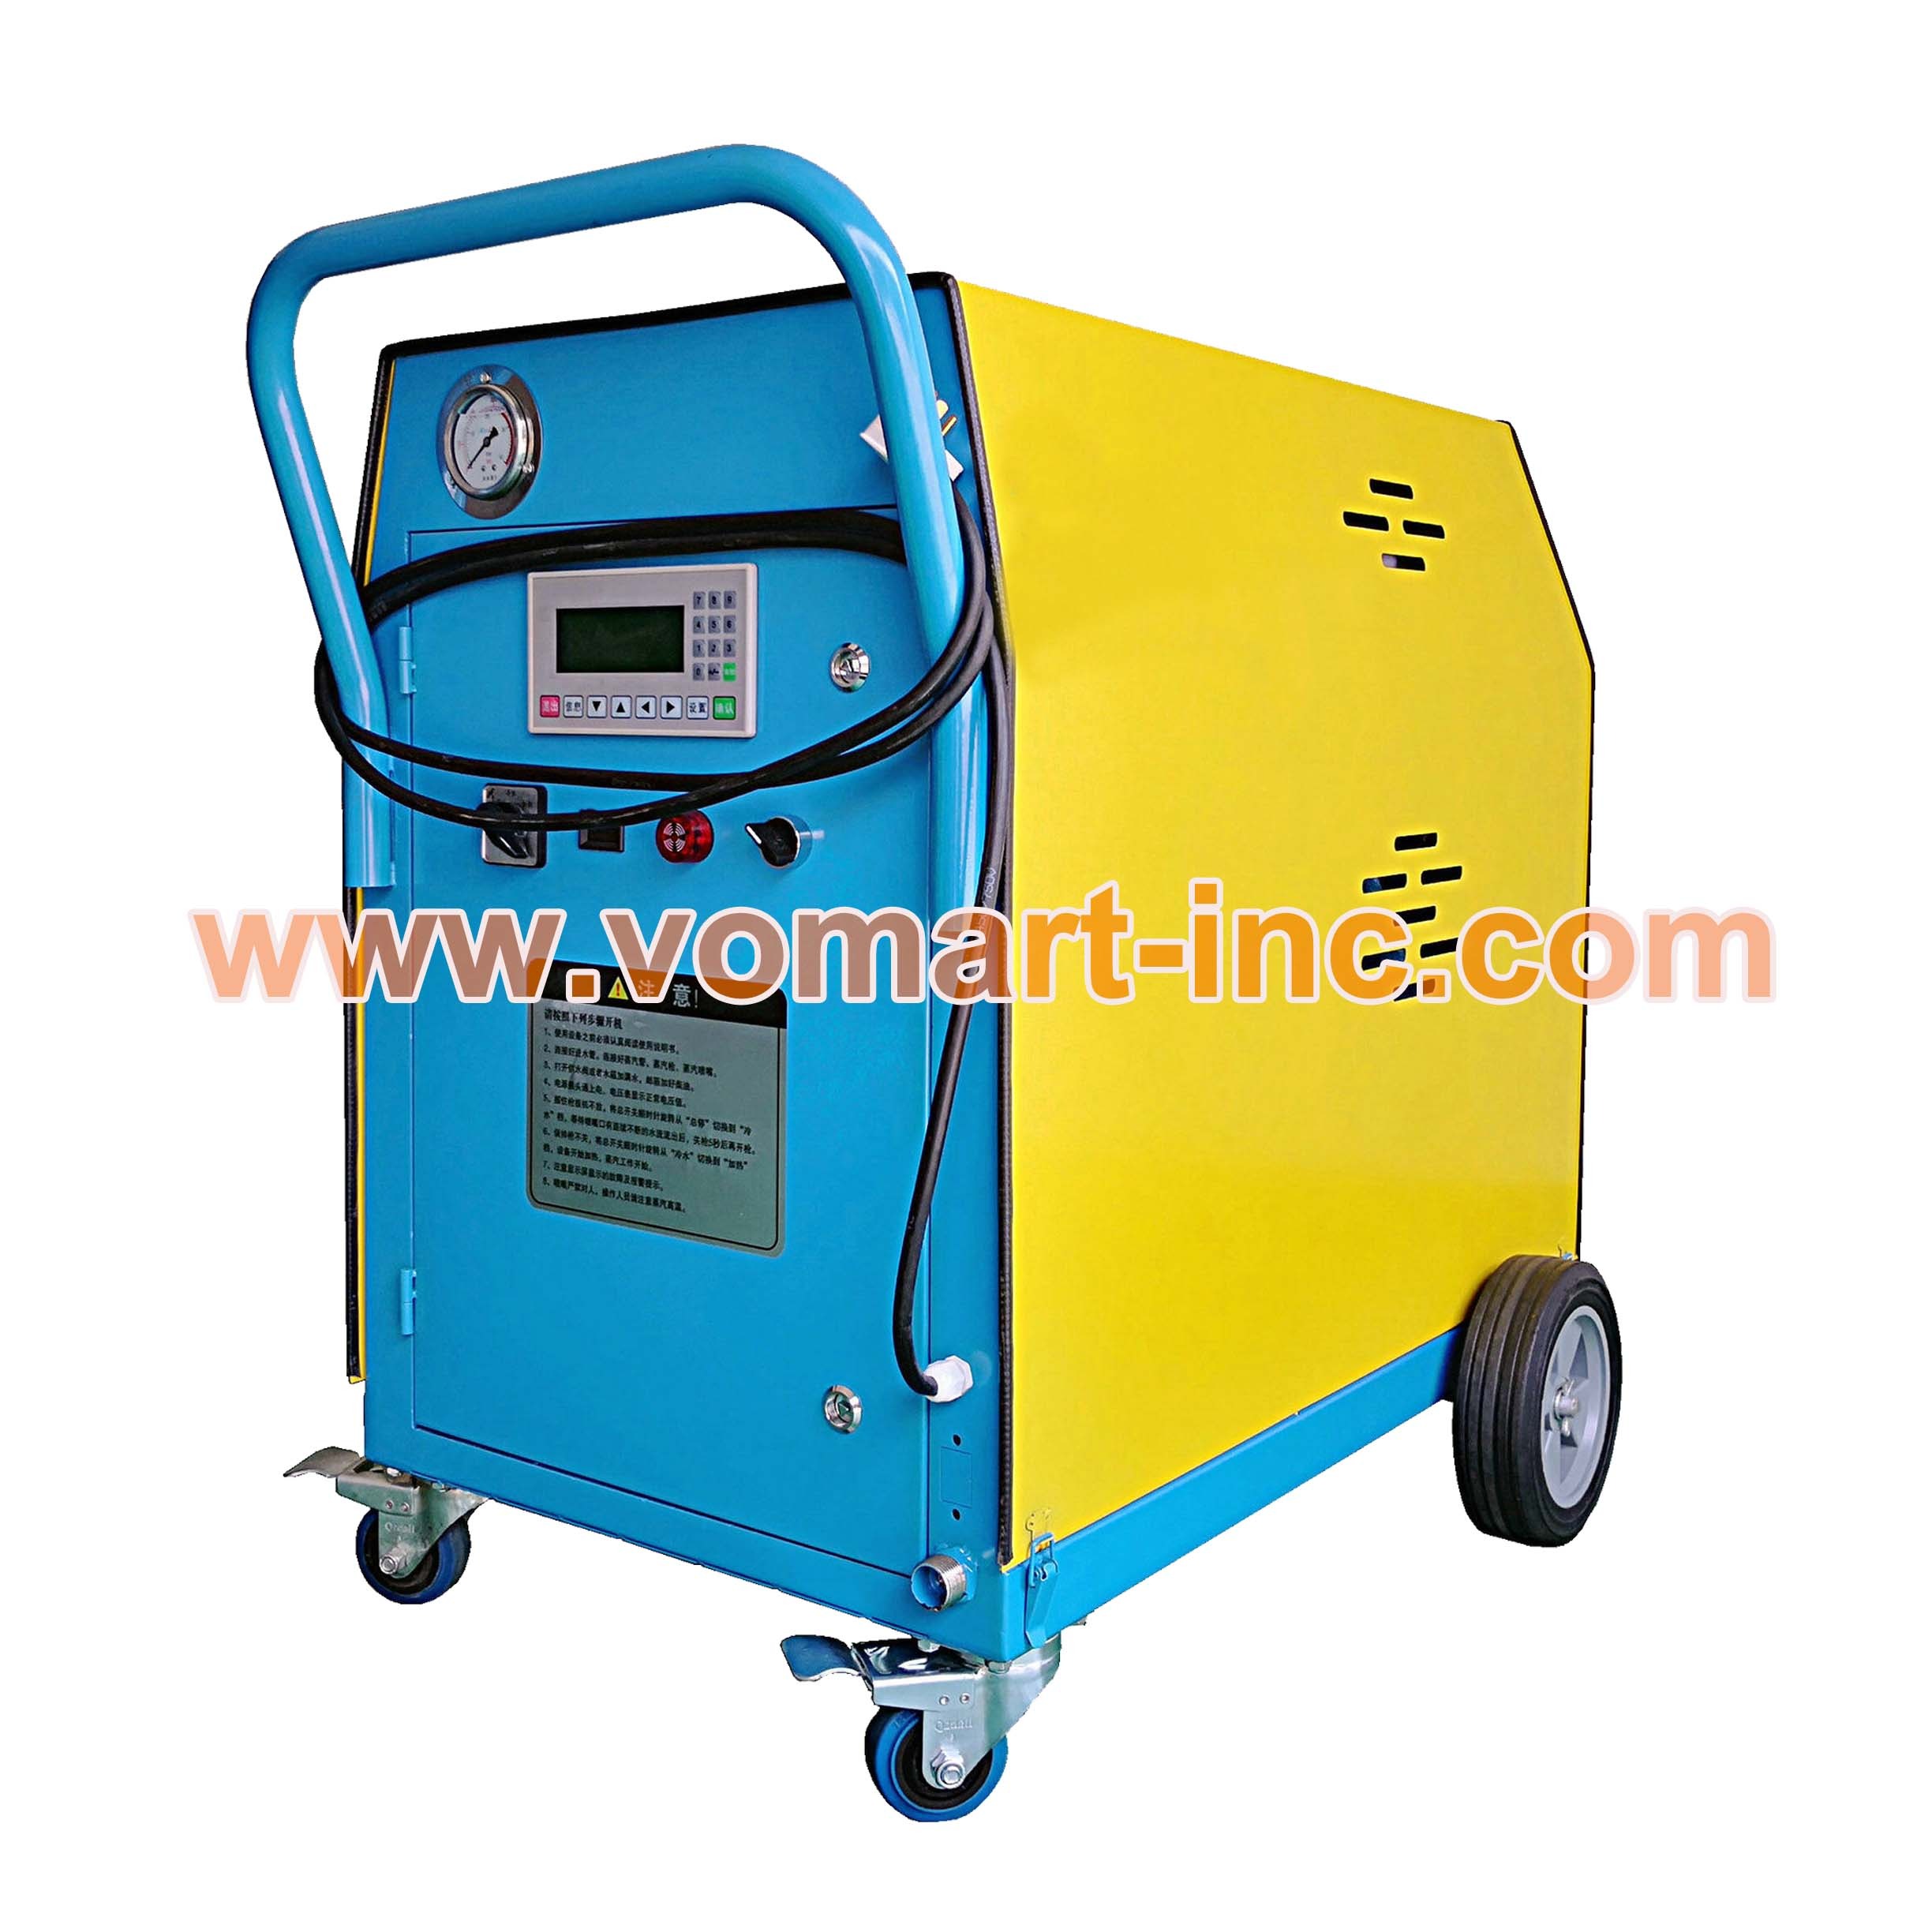 VTD20B Electric Diesel Mobile Steam Car Wash Machine